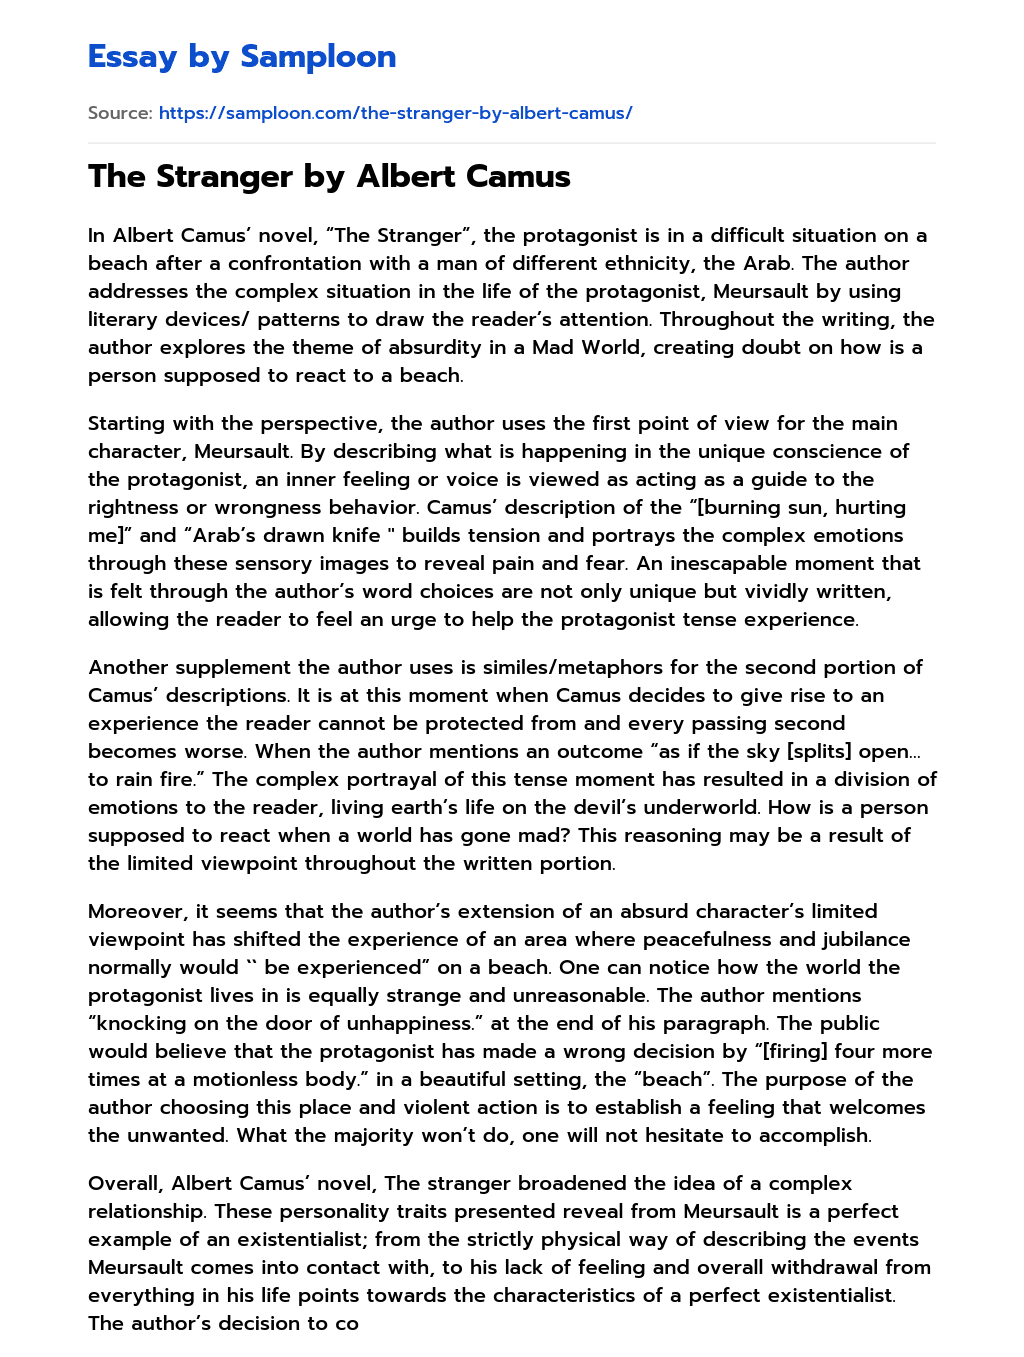 The Stranger by Albert Camus essay